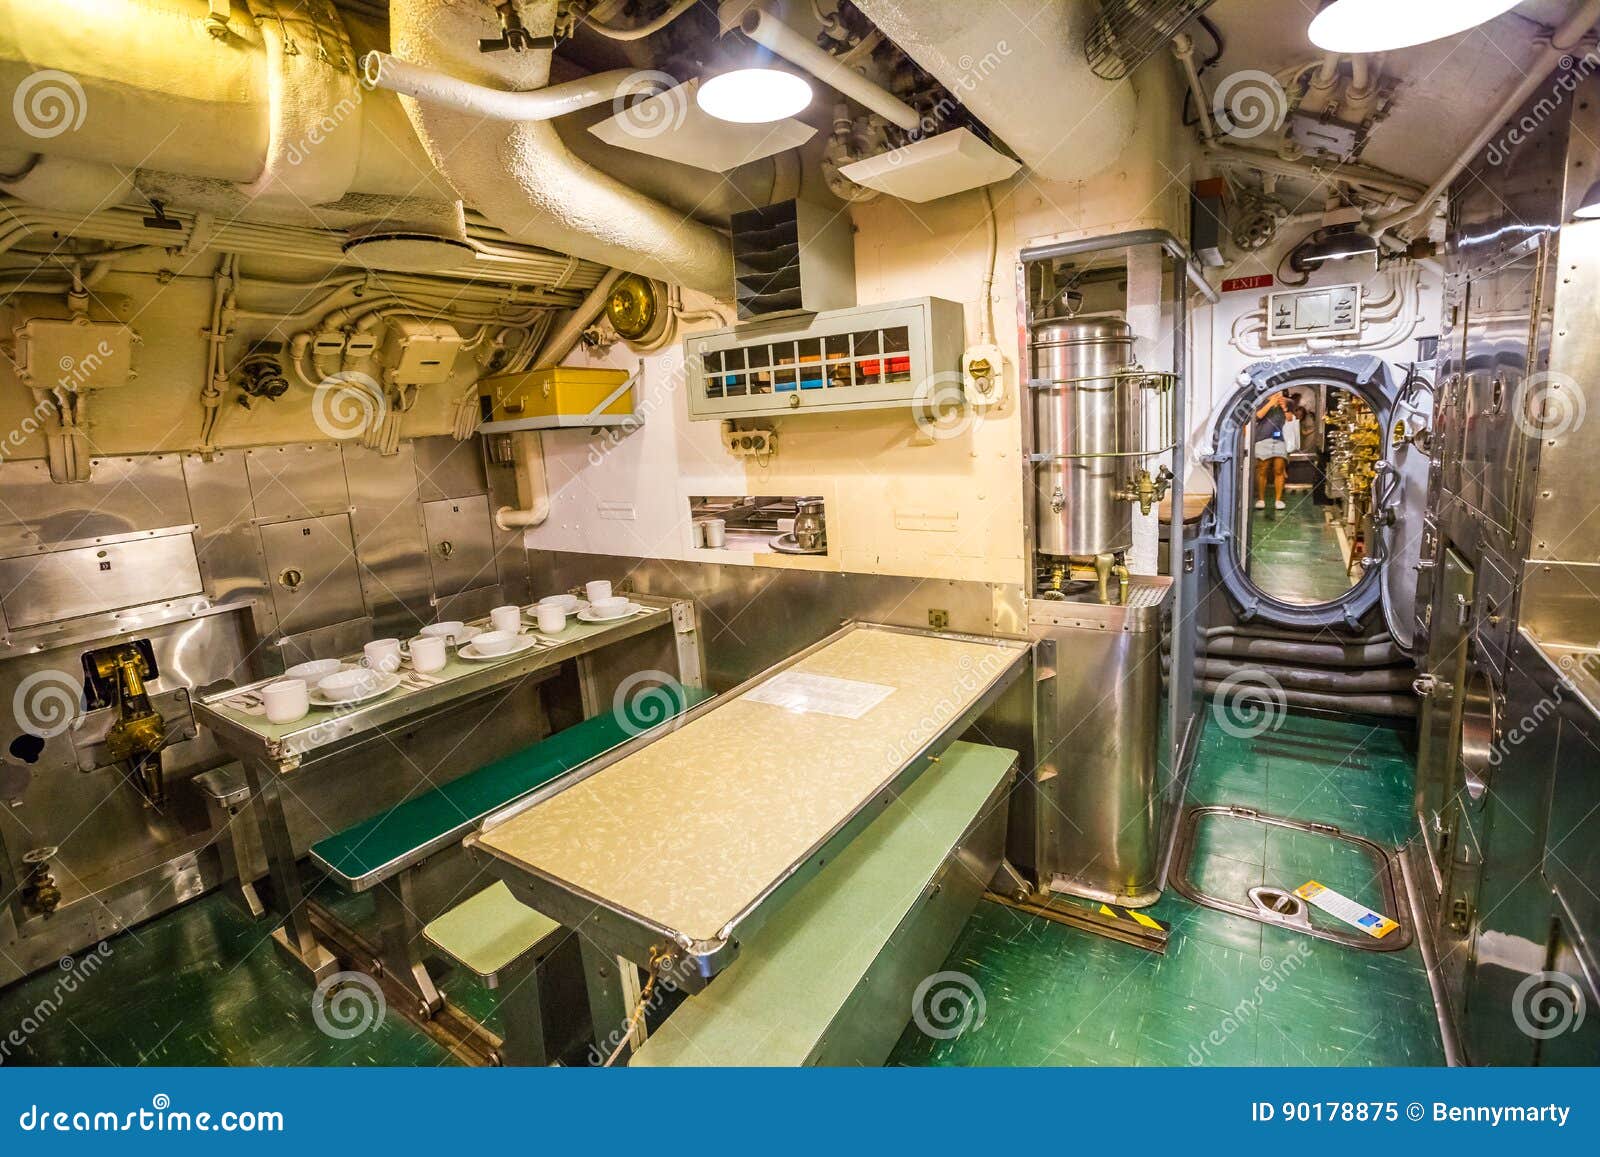 submarine officers dining room